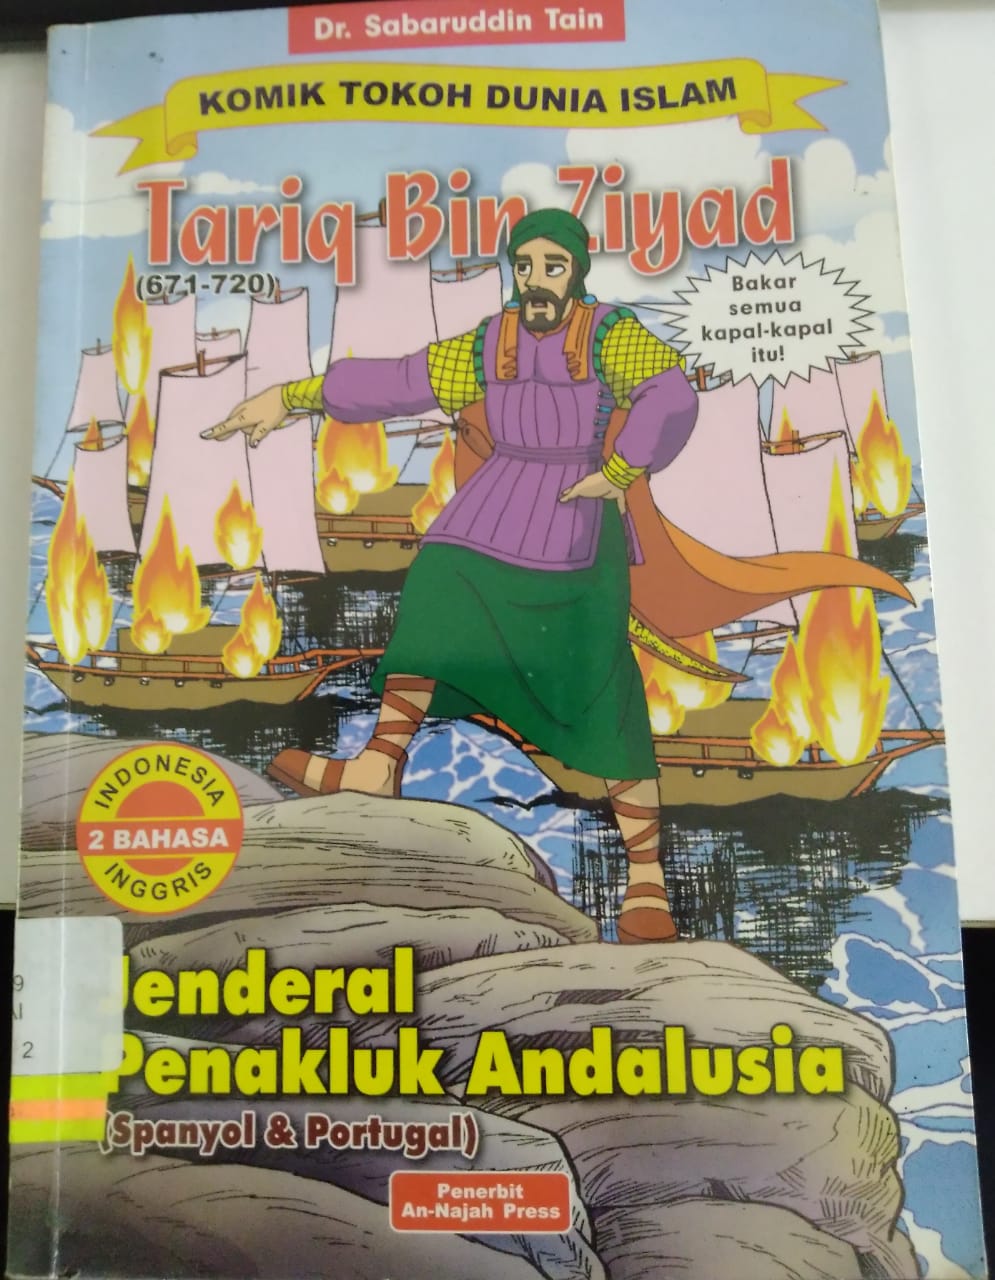 Komik Tokoh Dunia Islam Tariq Bin Ziyad (671-720 M) :  Jenderal Penakluk Andalusia (Spanyol & Portugal)